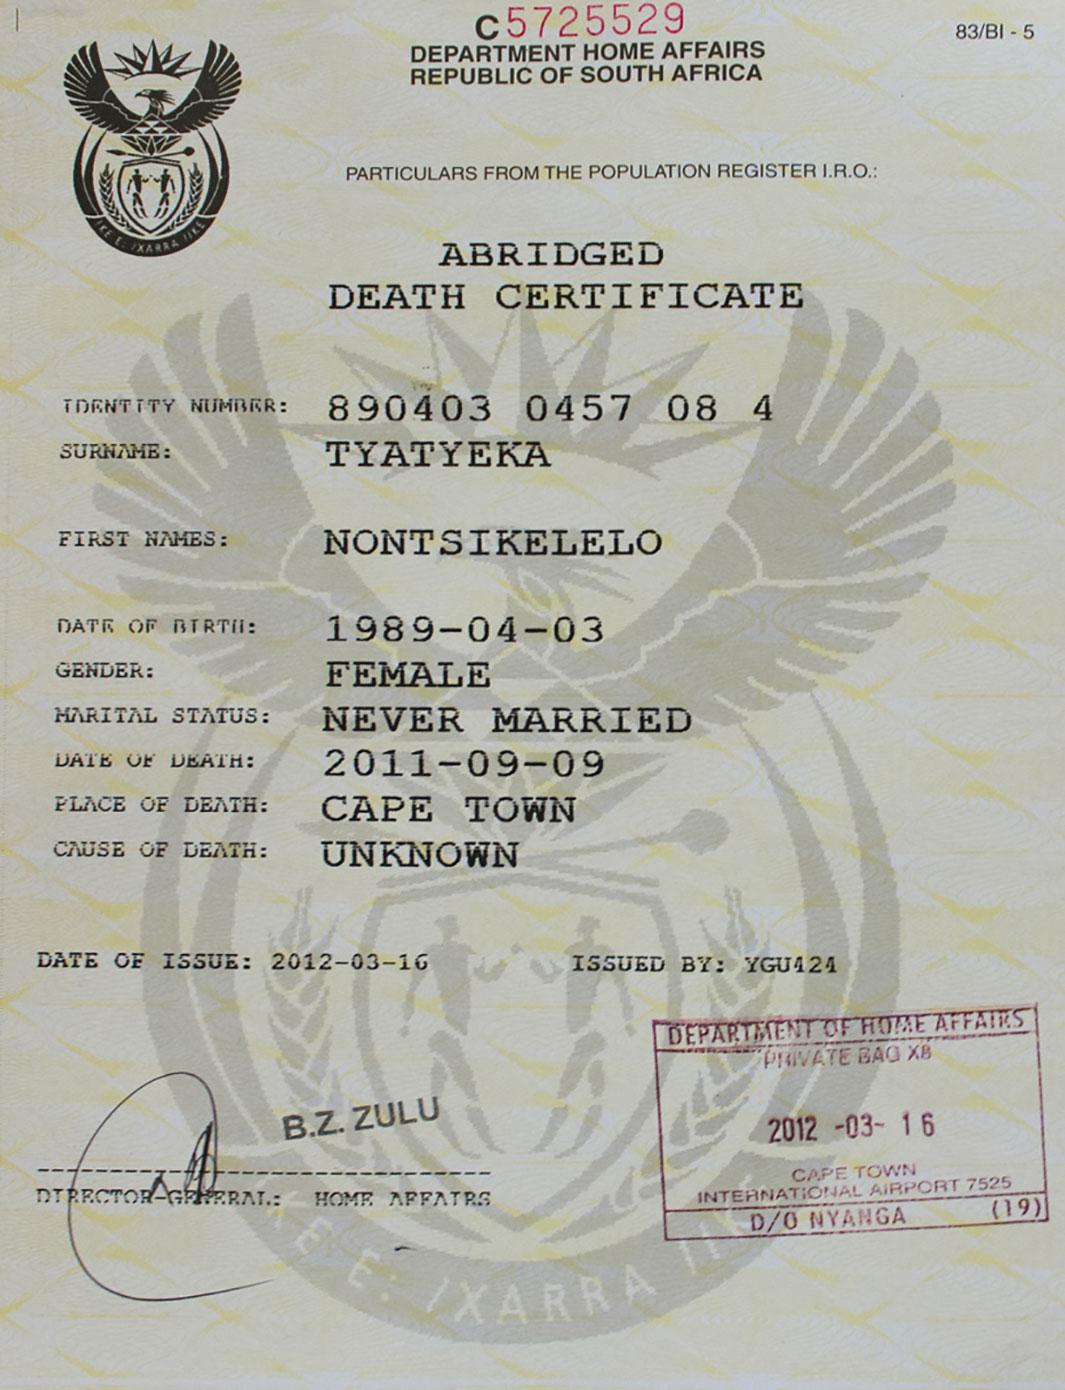 Ntisiki’s death certificate